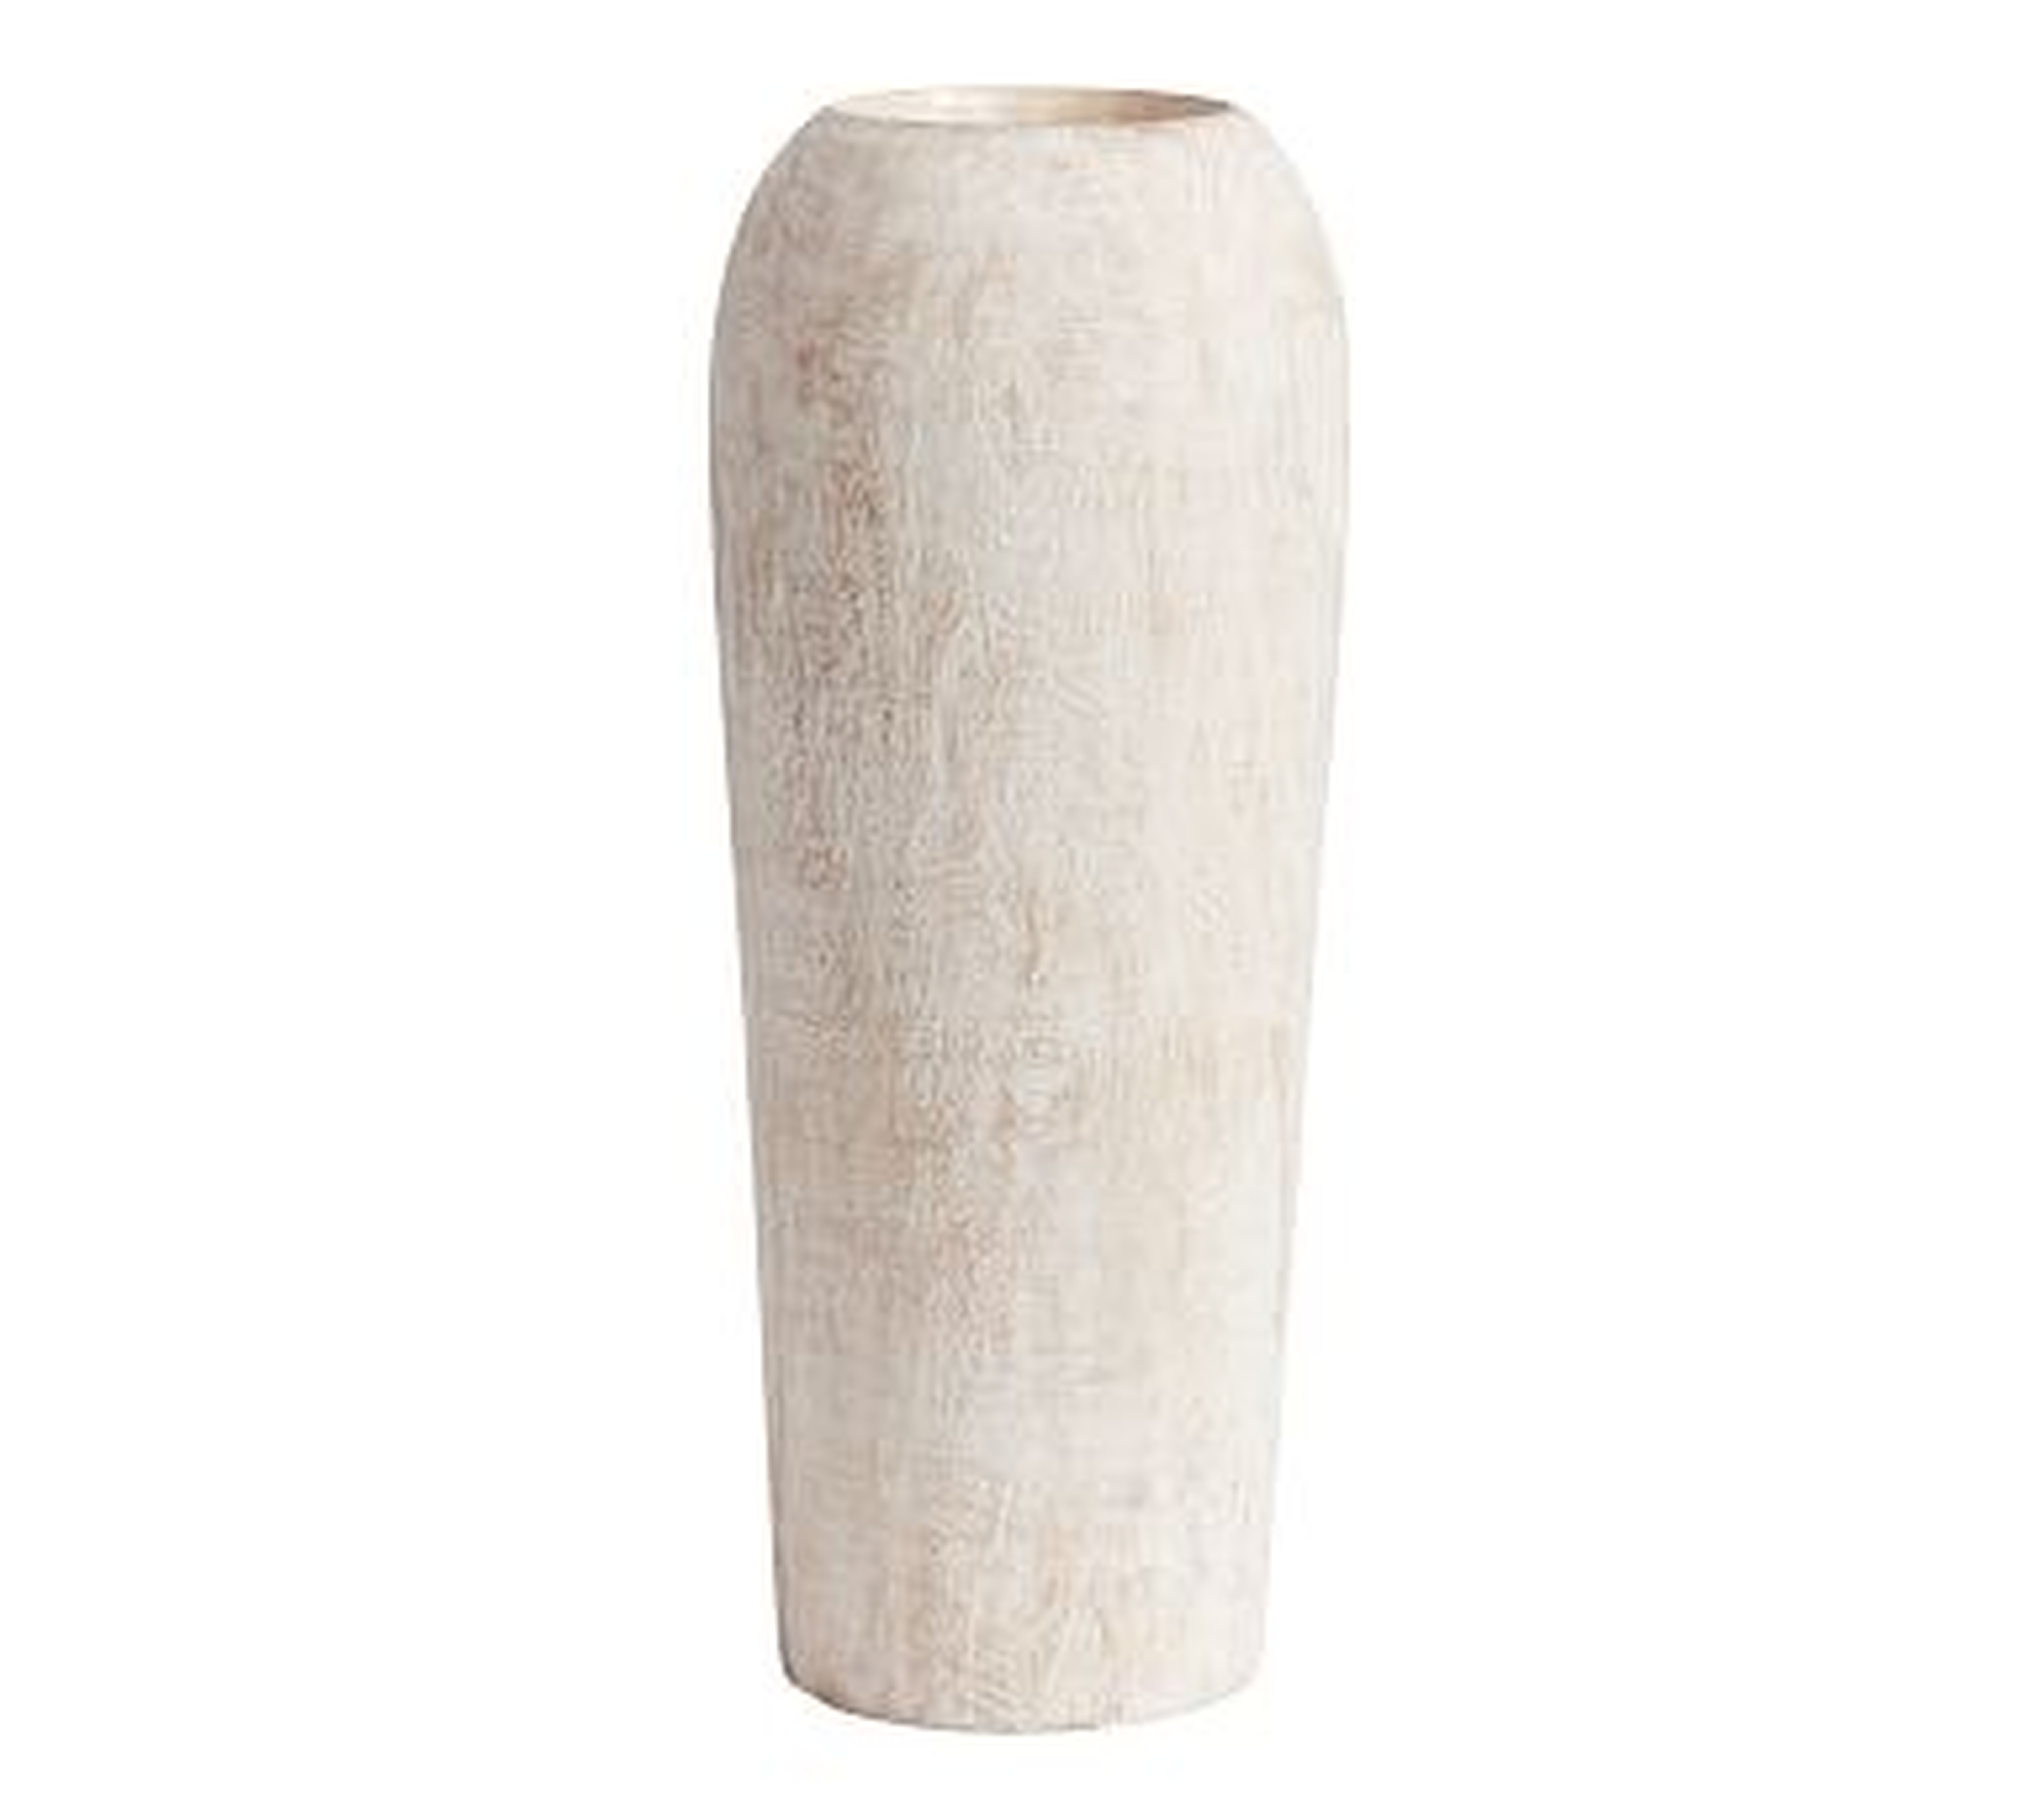 Wooden Vase, Small - Pottery Barn